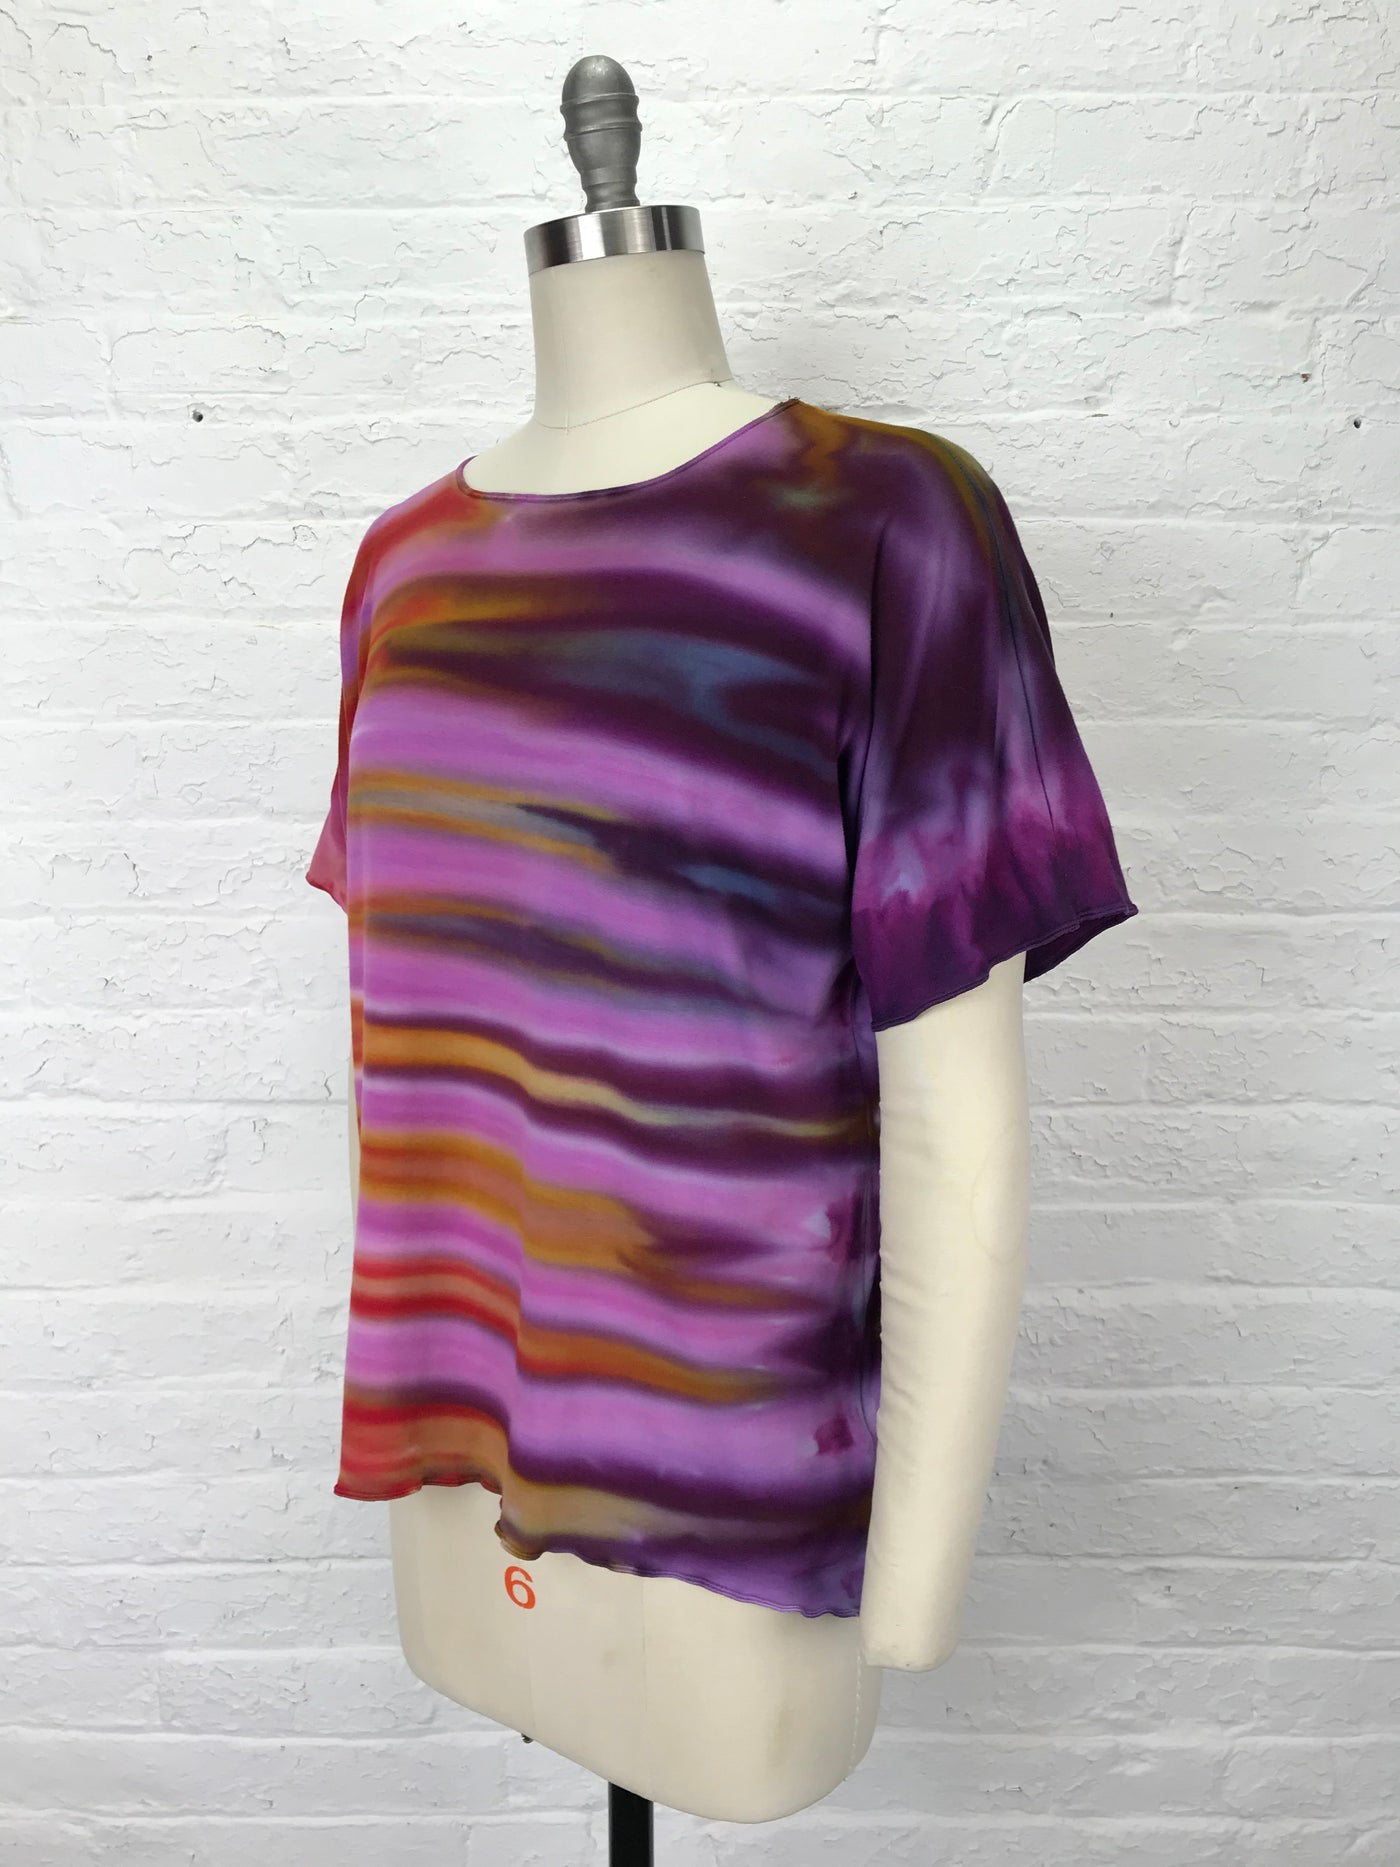 Juni Short Sleeve Shirt in Neon Fruit Stripe - One size